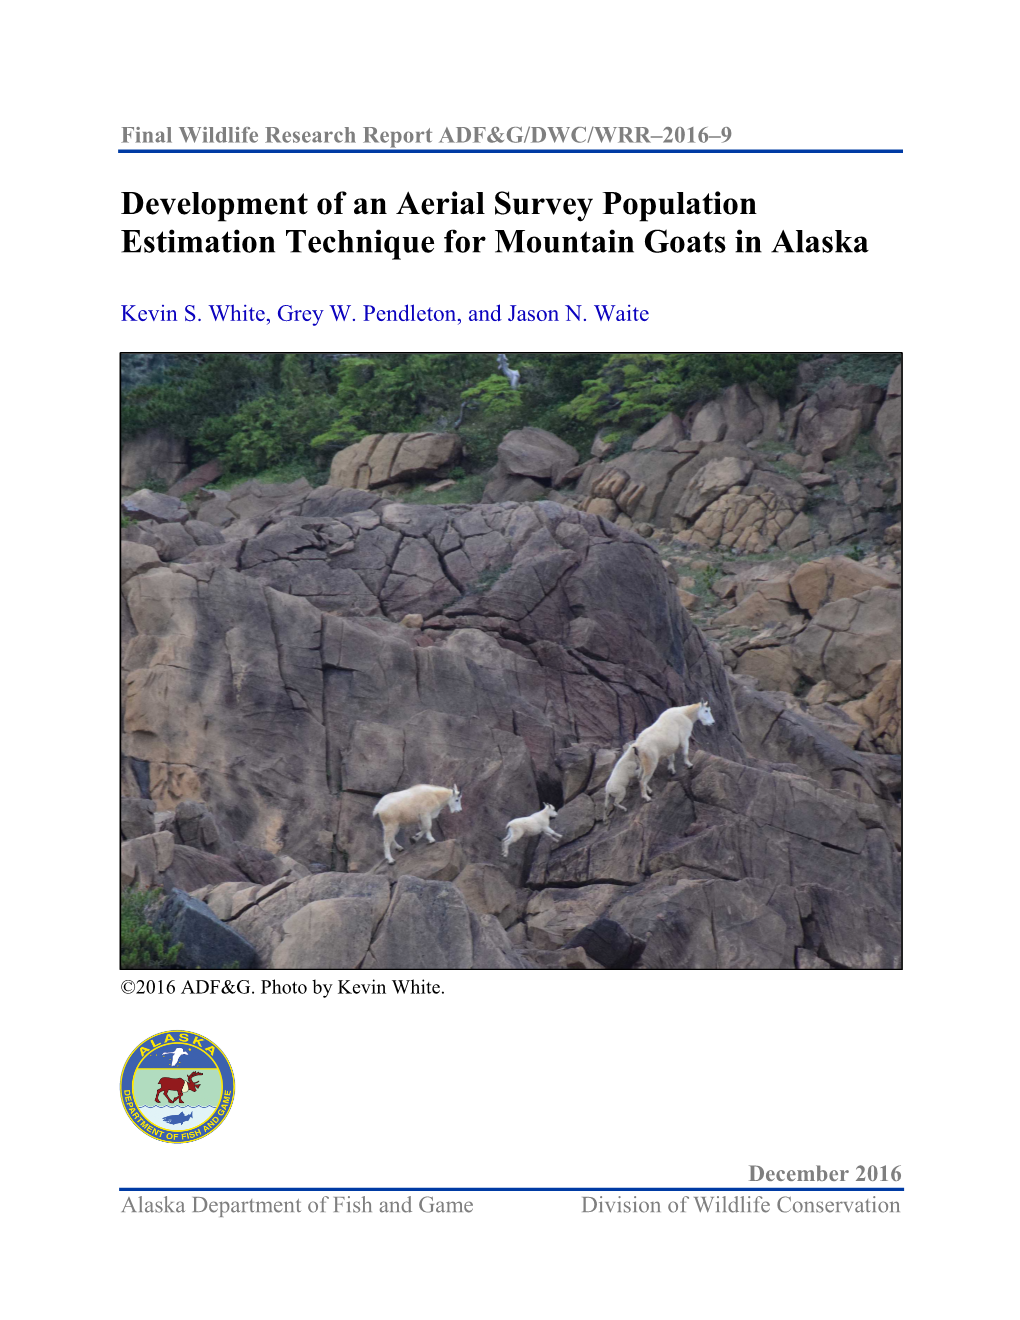 Development of an Aerial Survey Population Estimation Technique for Mountain Goats in Alaska